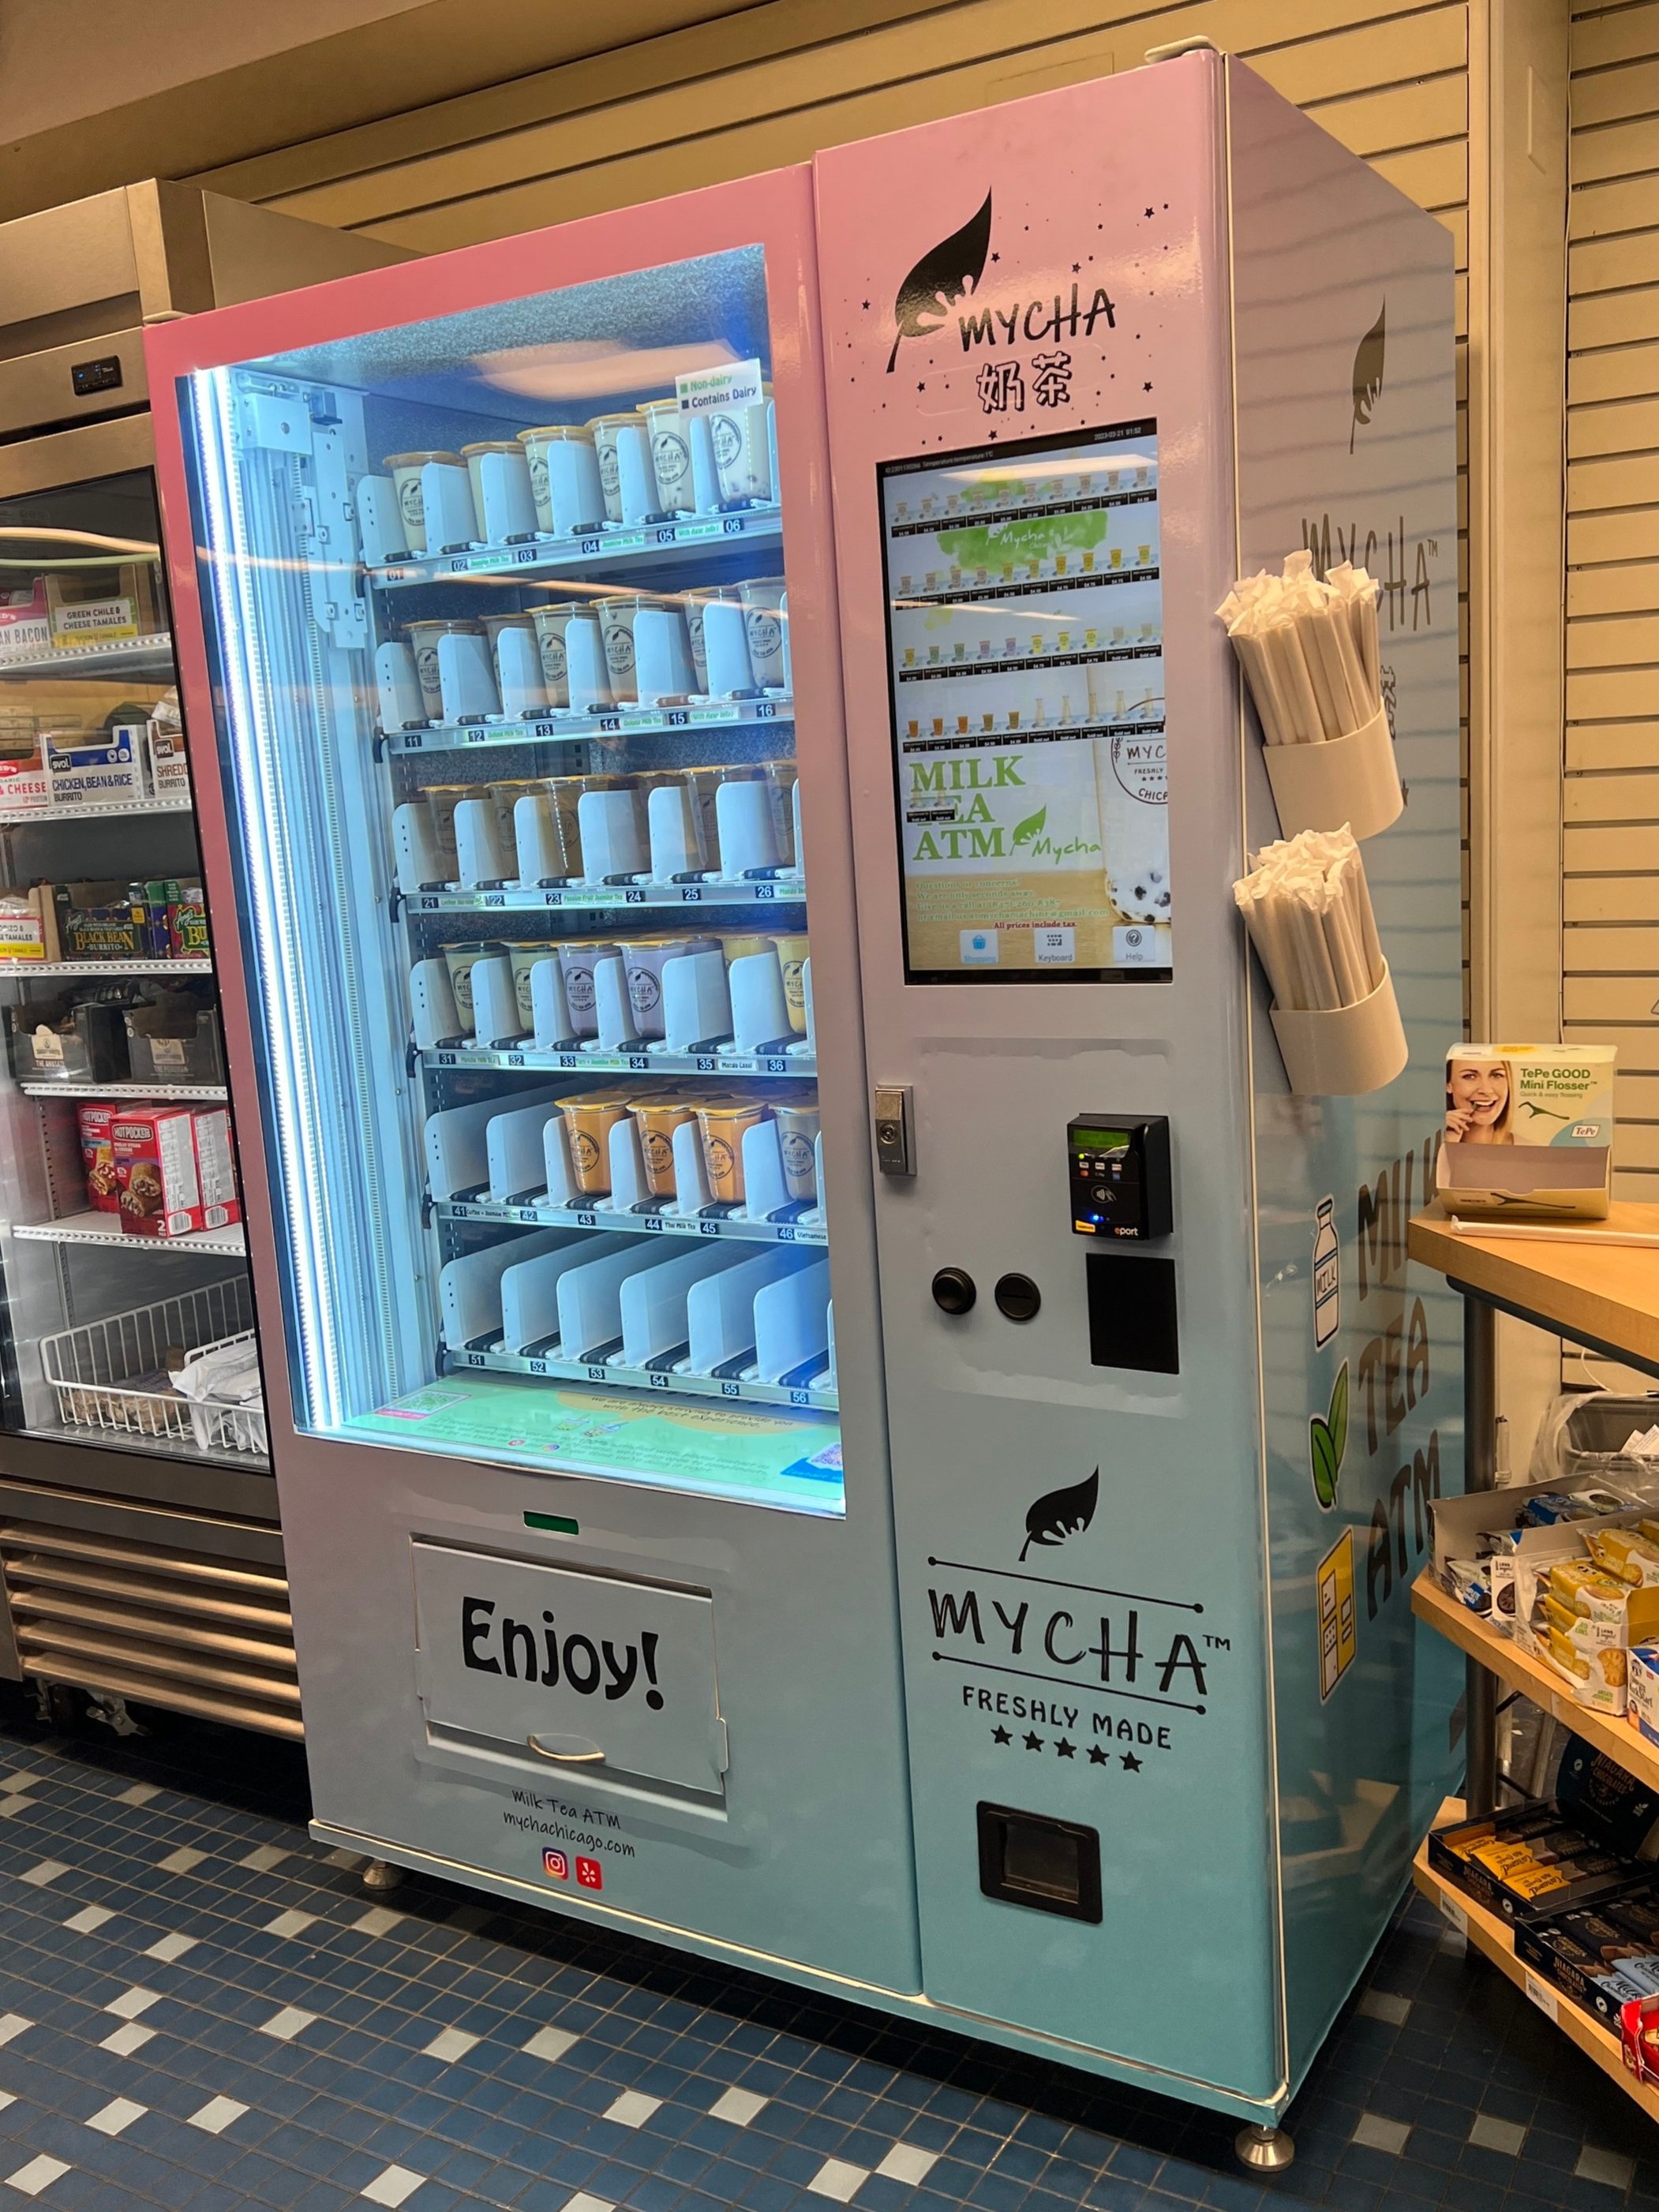 Mycha brings fresh, on-demand milk tea to Health Sciences Store